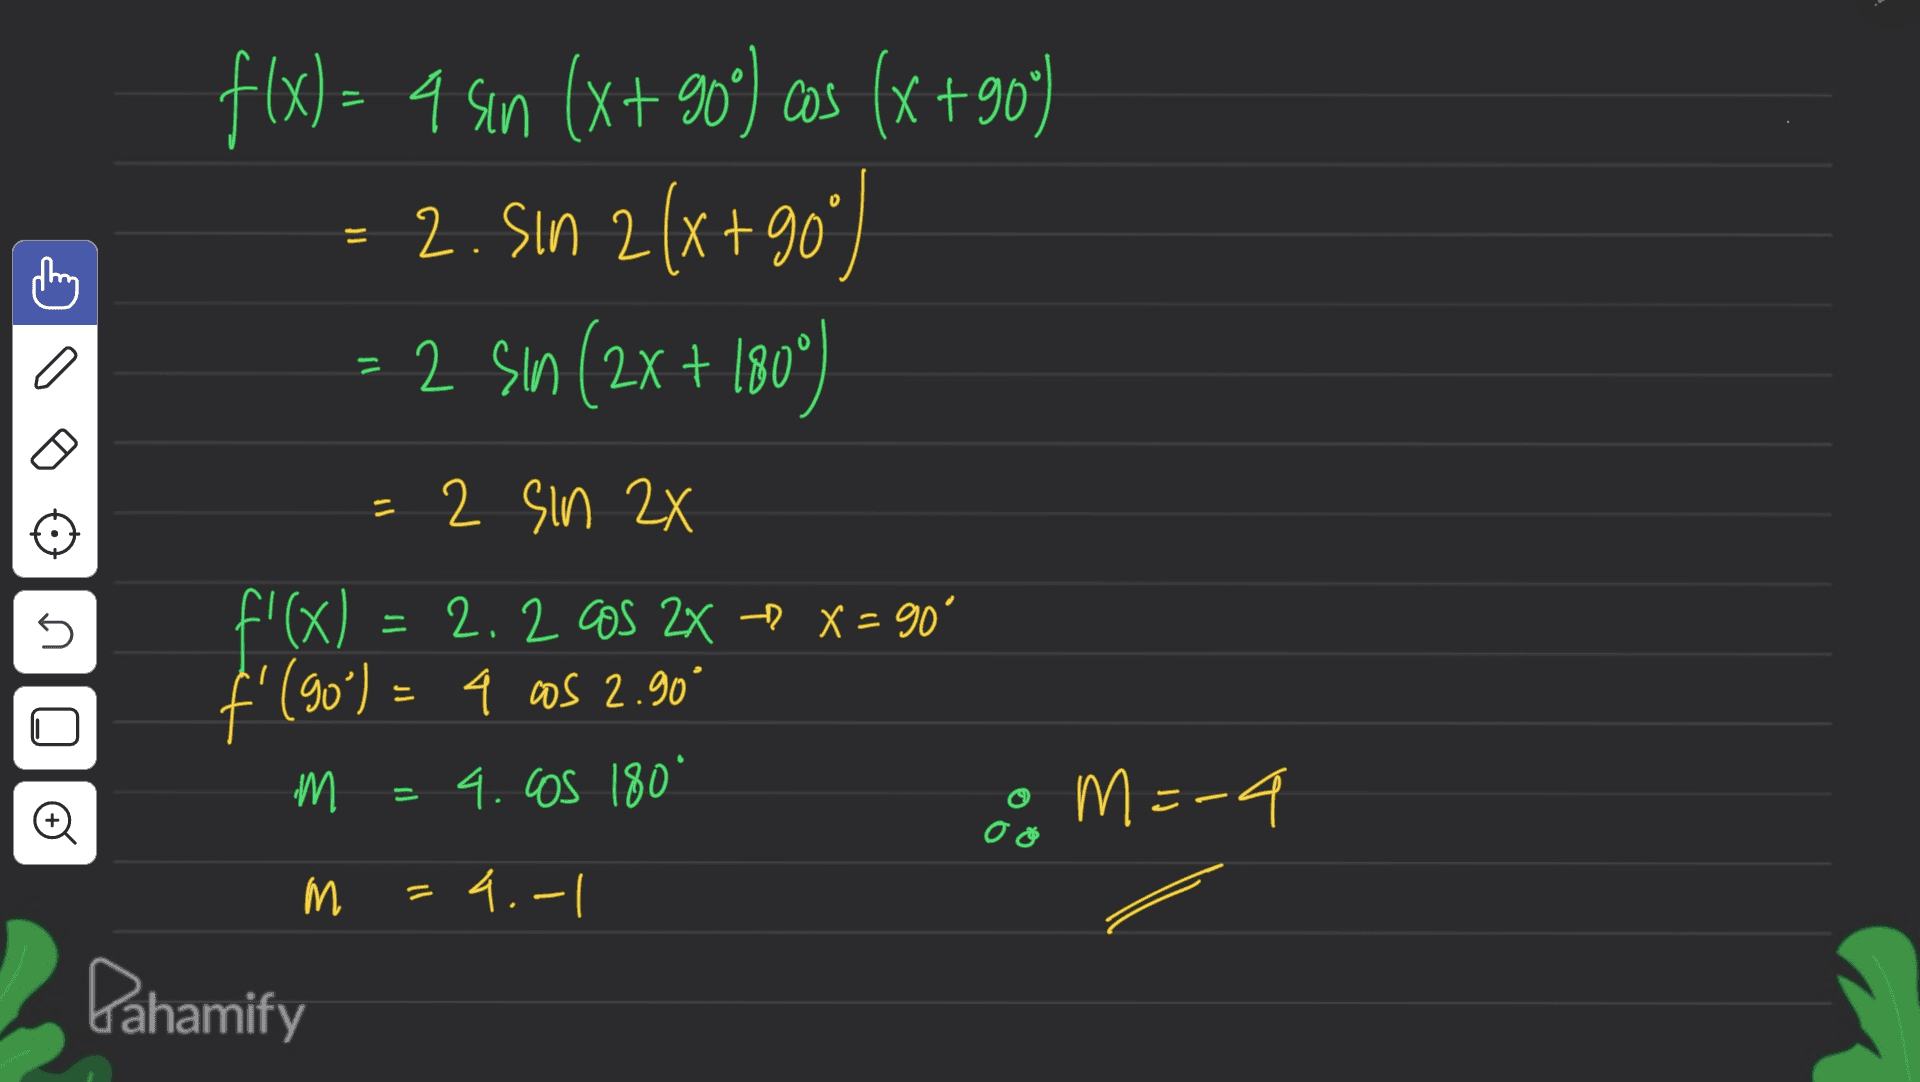 f(x) = 4 sin (x+ 90°) cos (x +909 ) = 2. Sın 2(x +909) 2+ = 2 sin (2x + 1809 ) - a = 2 sin 2x s s f (x) = 2.2 cos 2x - x = 90° f (90') = 4 cos 2.90 a ° m 4.05 180 Oo = M M. 8 m=-4 M 4.-1 Dahamify 